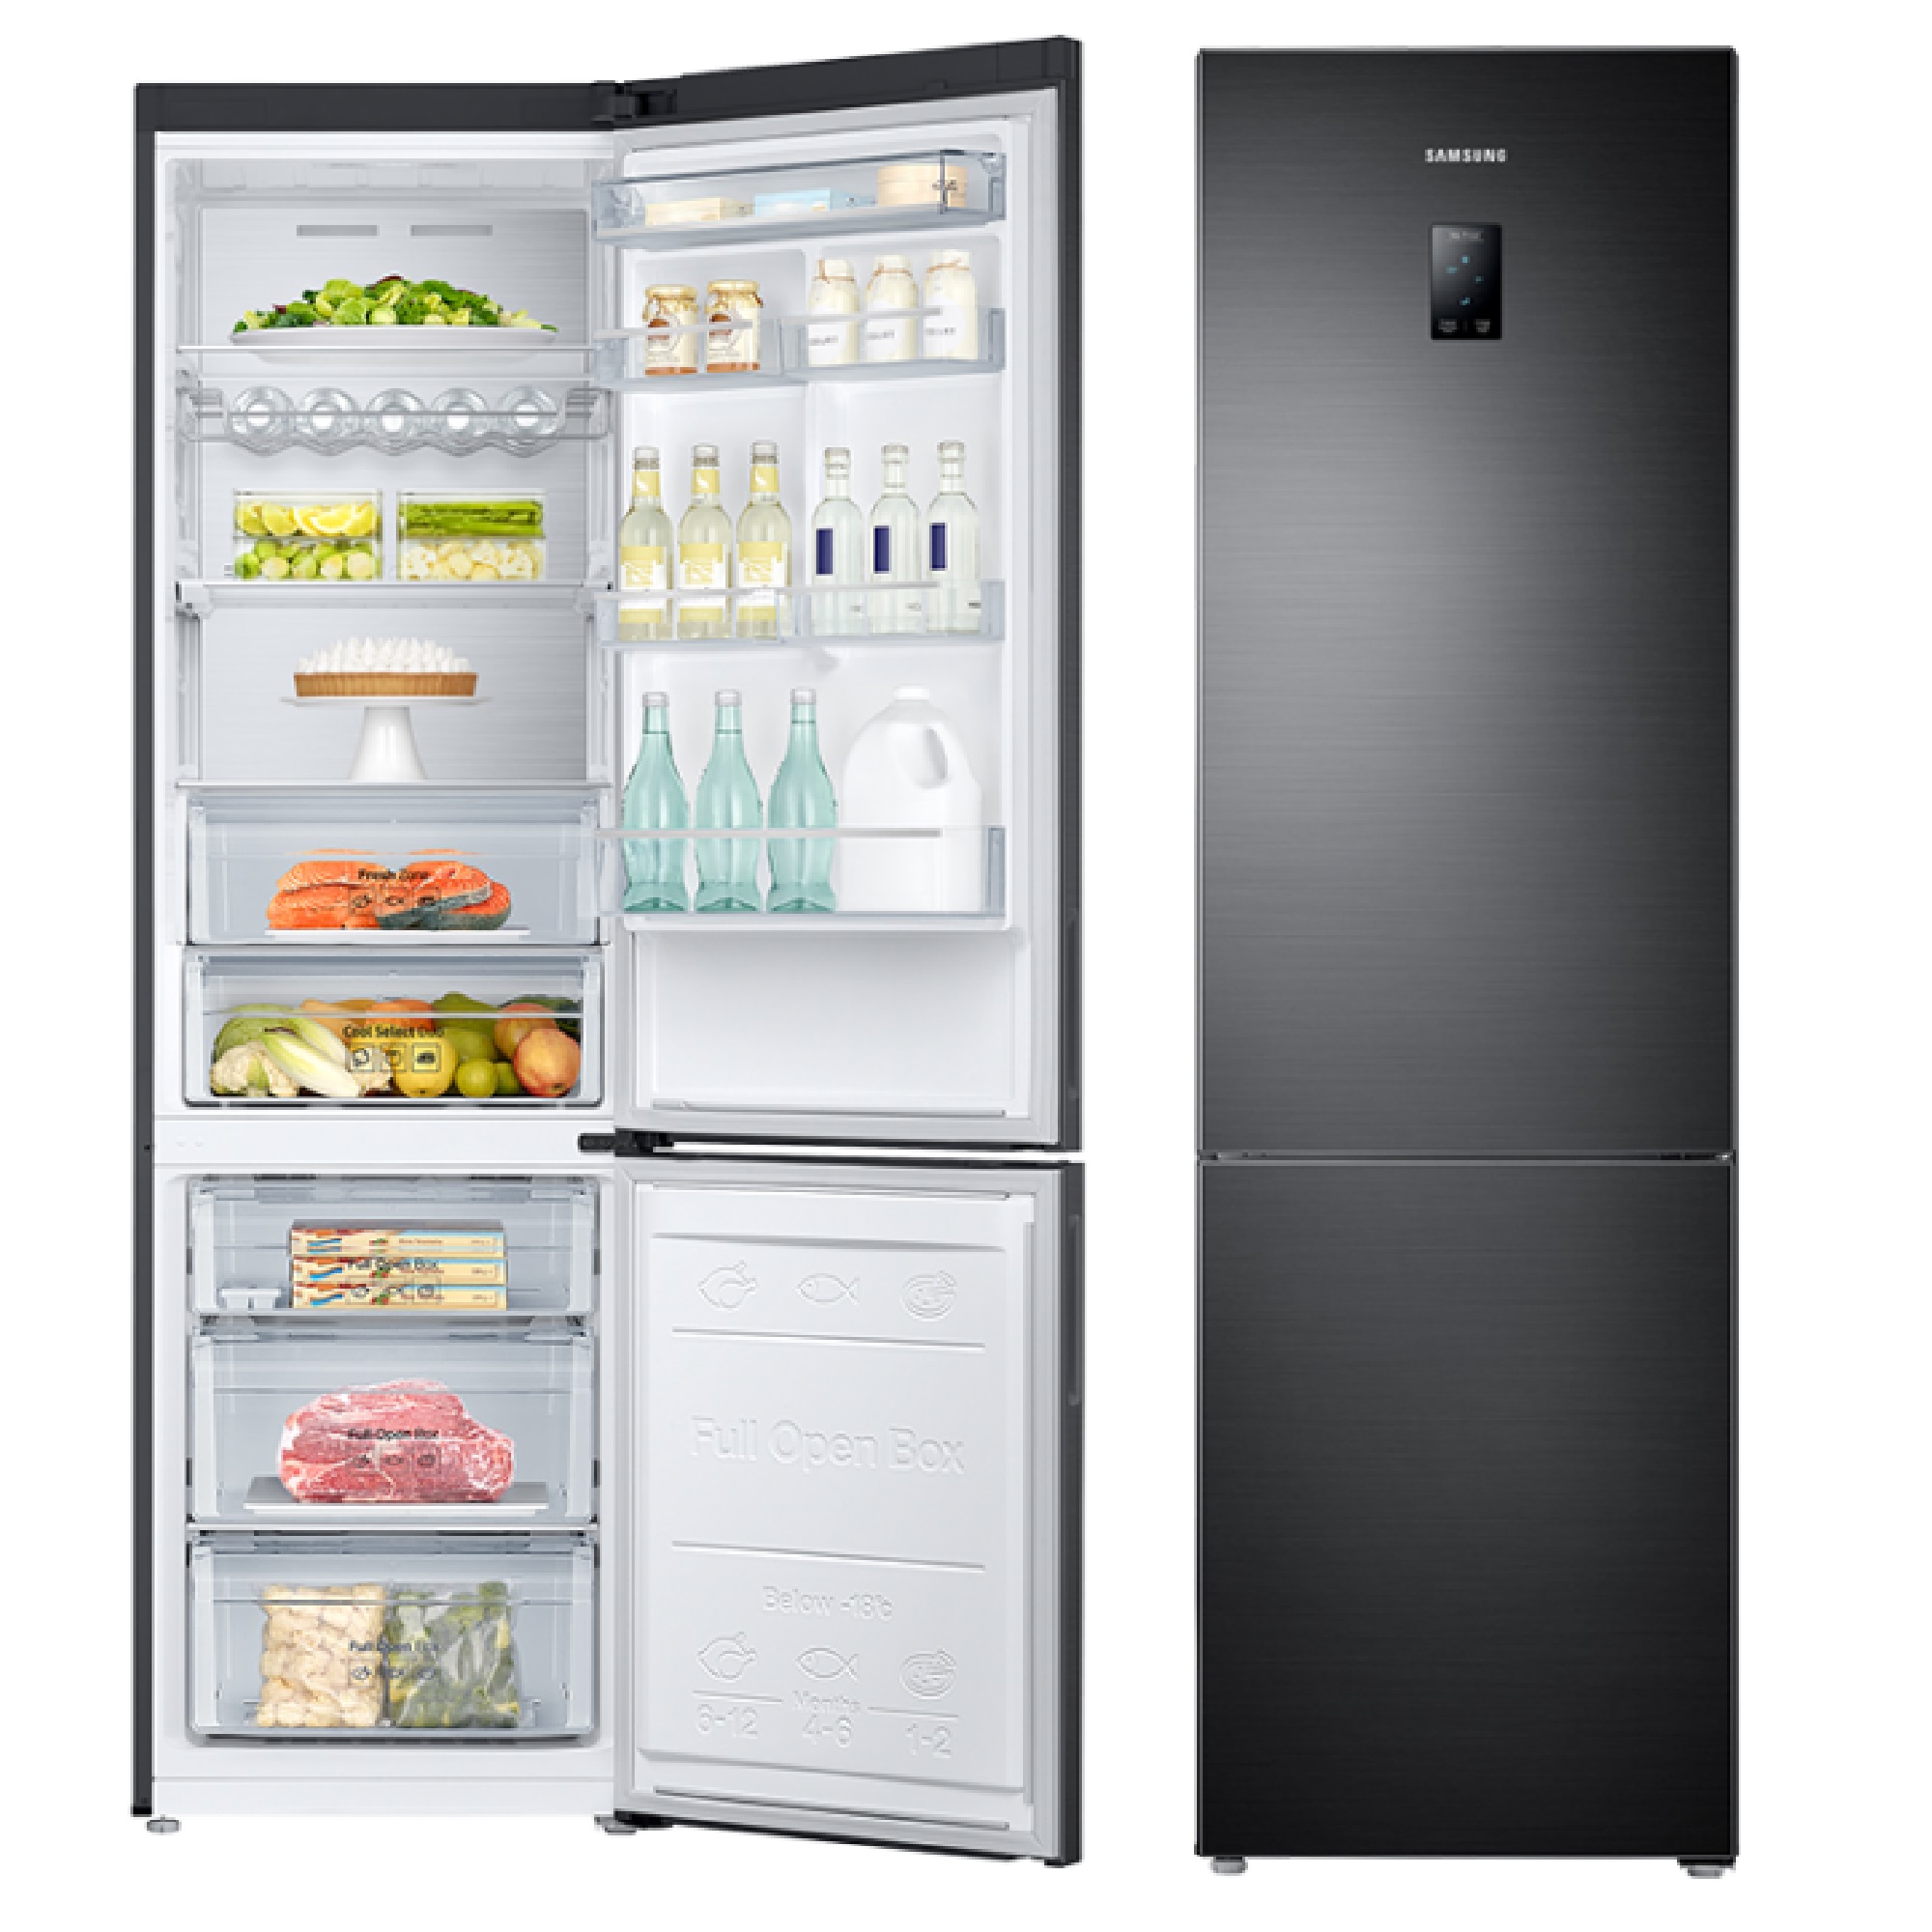 Хорошие недорогие холодильники ноу фрост. Samsung RB-37j5200ww. Холодильник Samsung RB-37 j5000sa. Samsung rb37a50n0sa. Холодильник Samsung rb37a5491sa.